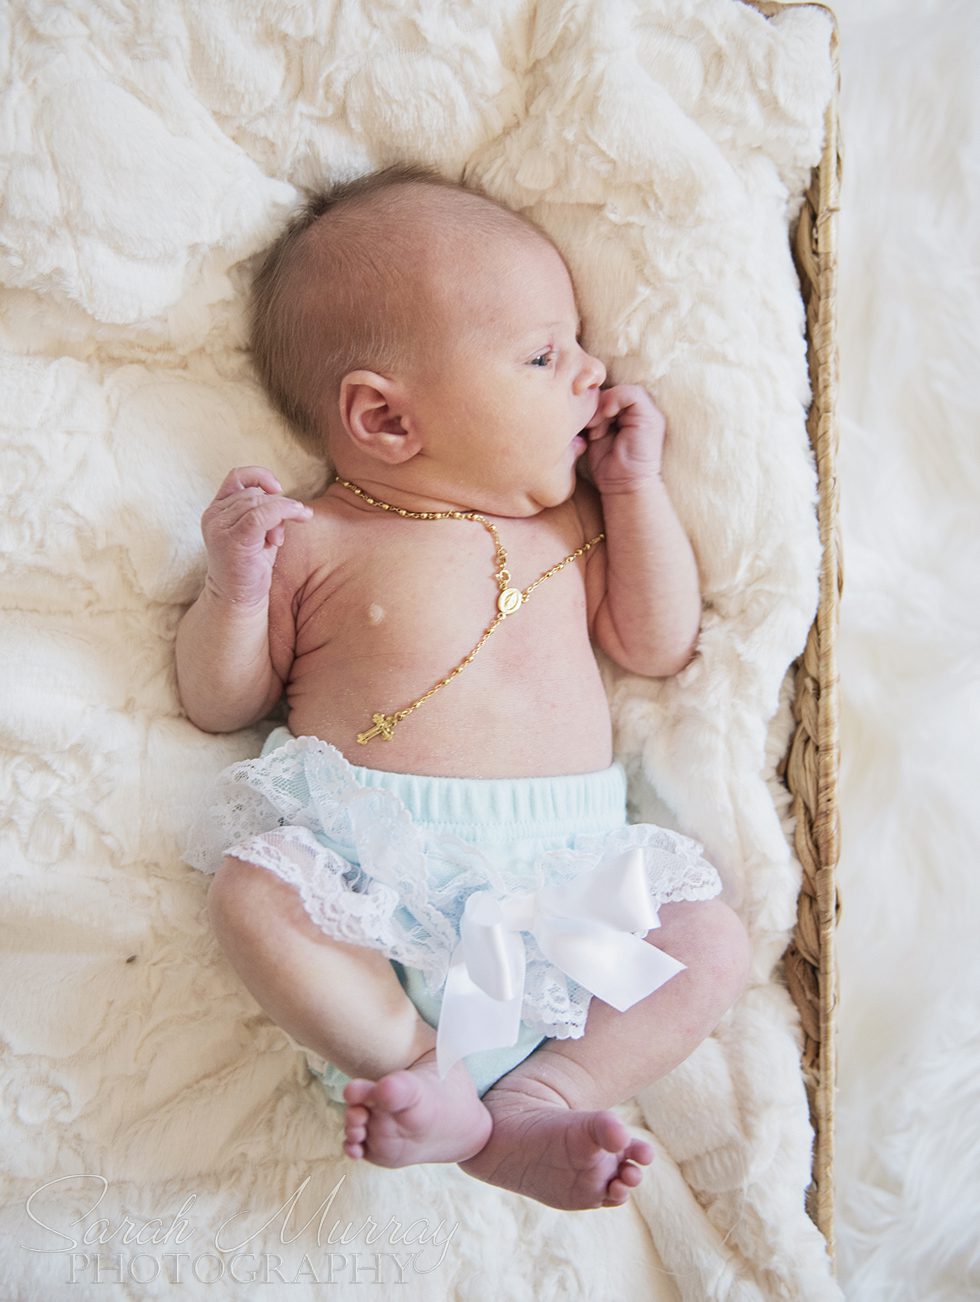 Baby Arriah Mae Newborn Session Cape Cod, Massachusetts - Sarah Murray Photography